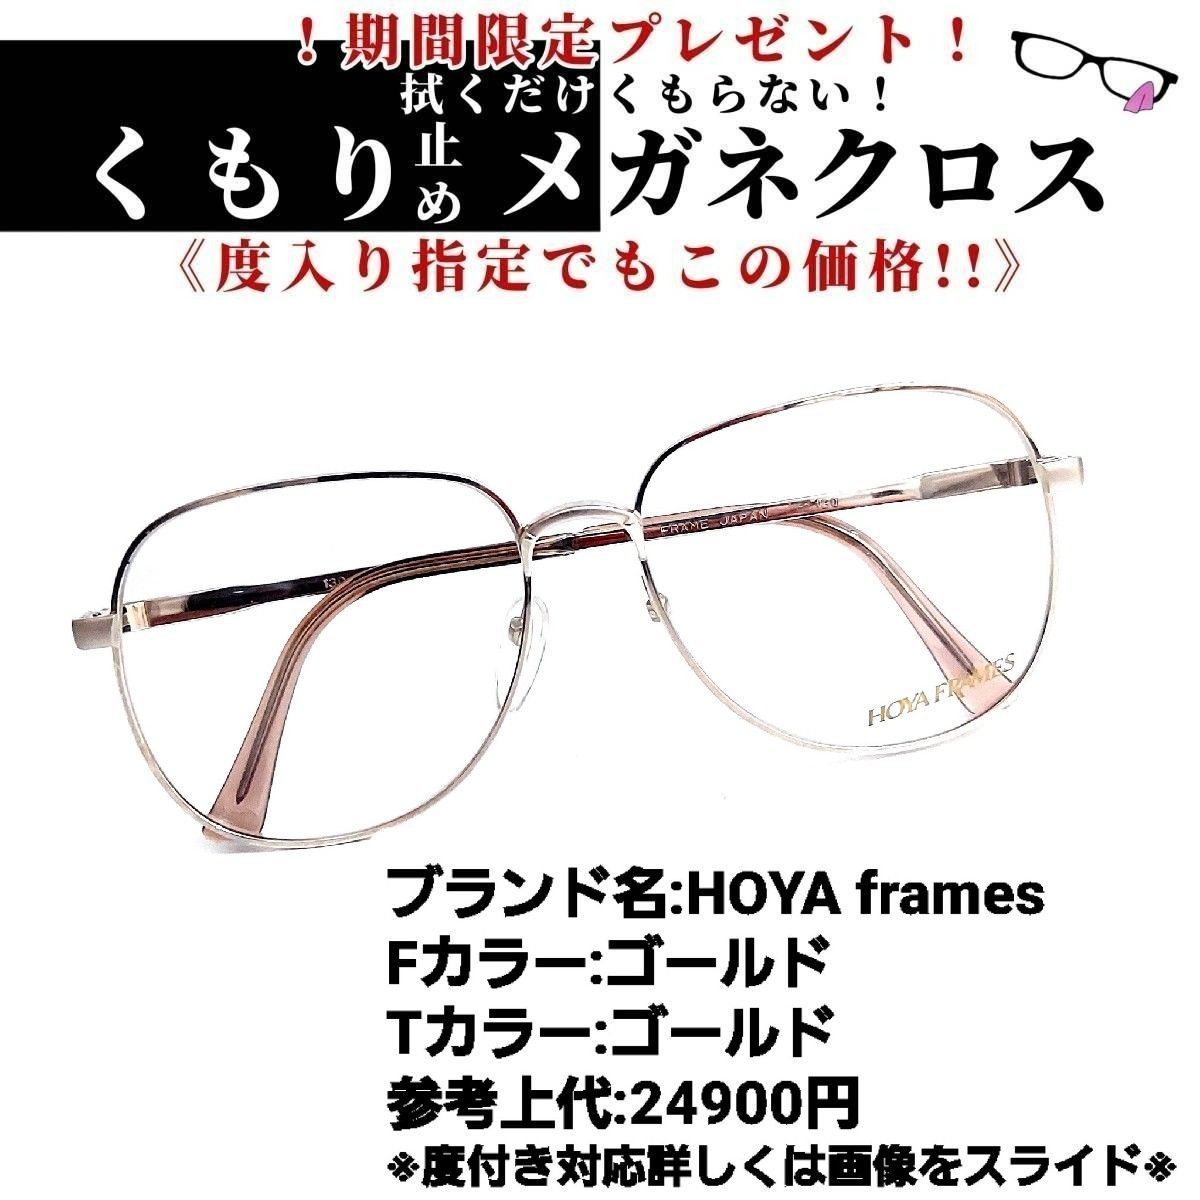 No.1274+メガネ HOYA frames【度数入り込み価格】 - スッキリ生活専門